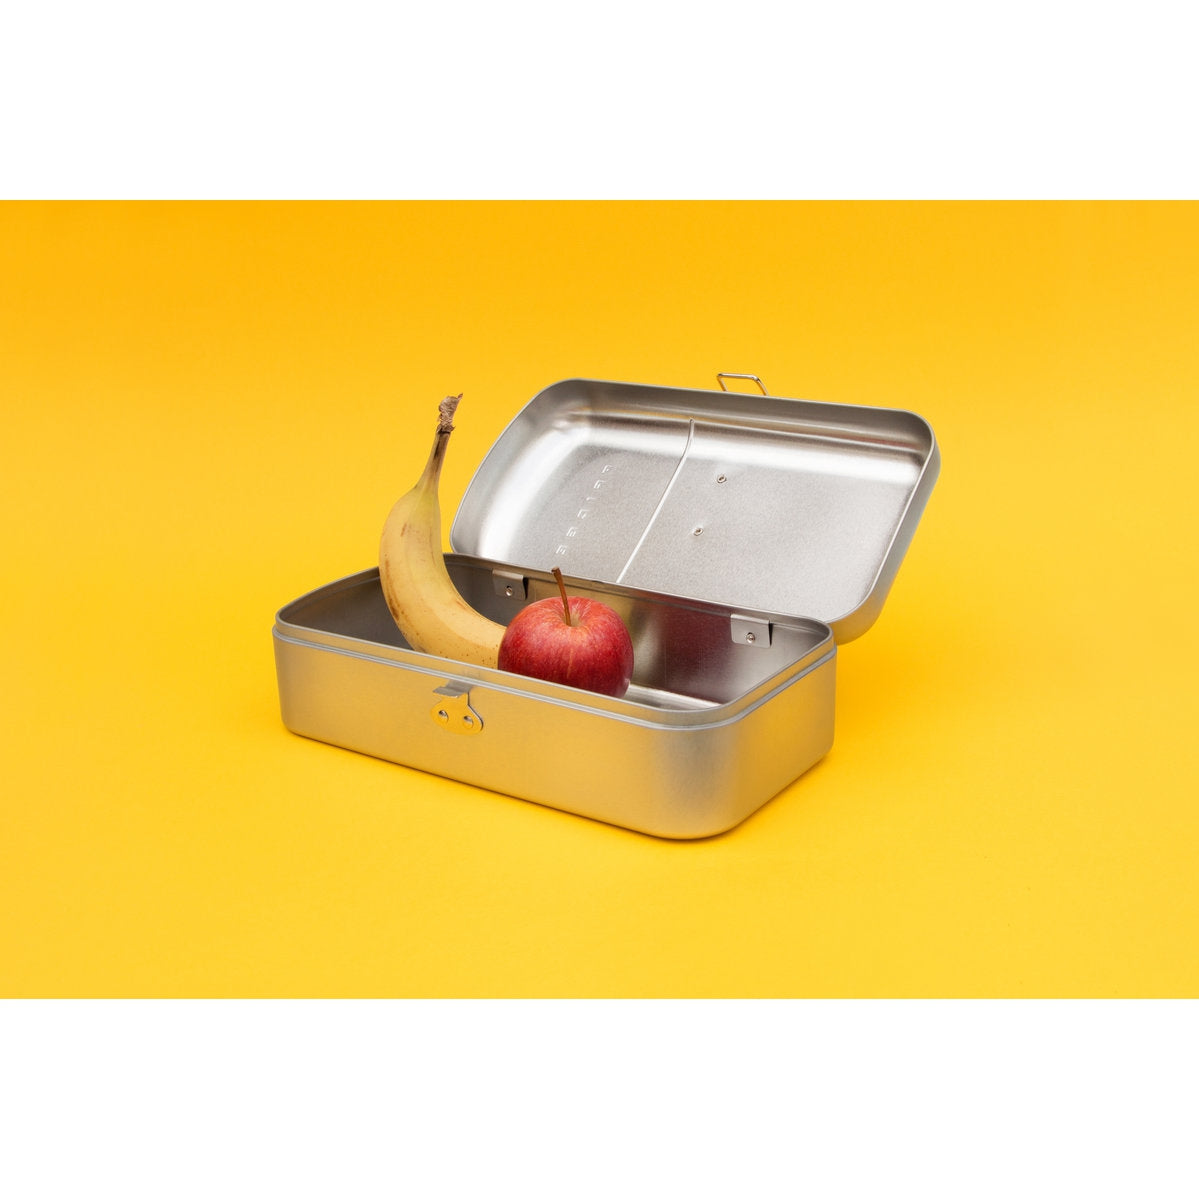 Metal Lunch Box